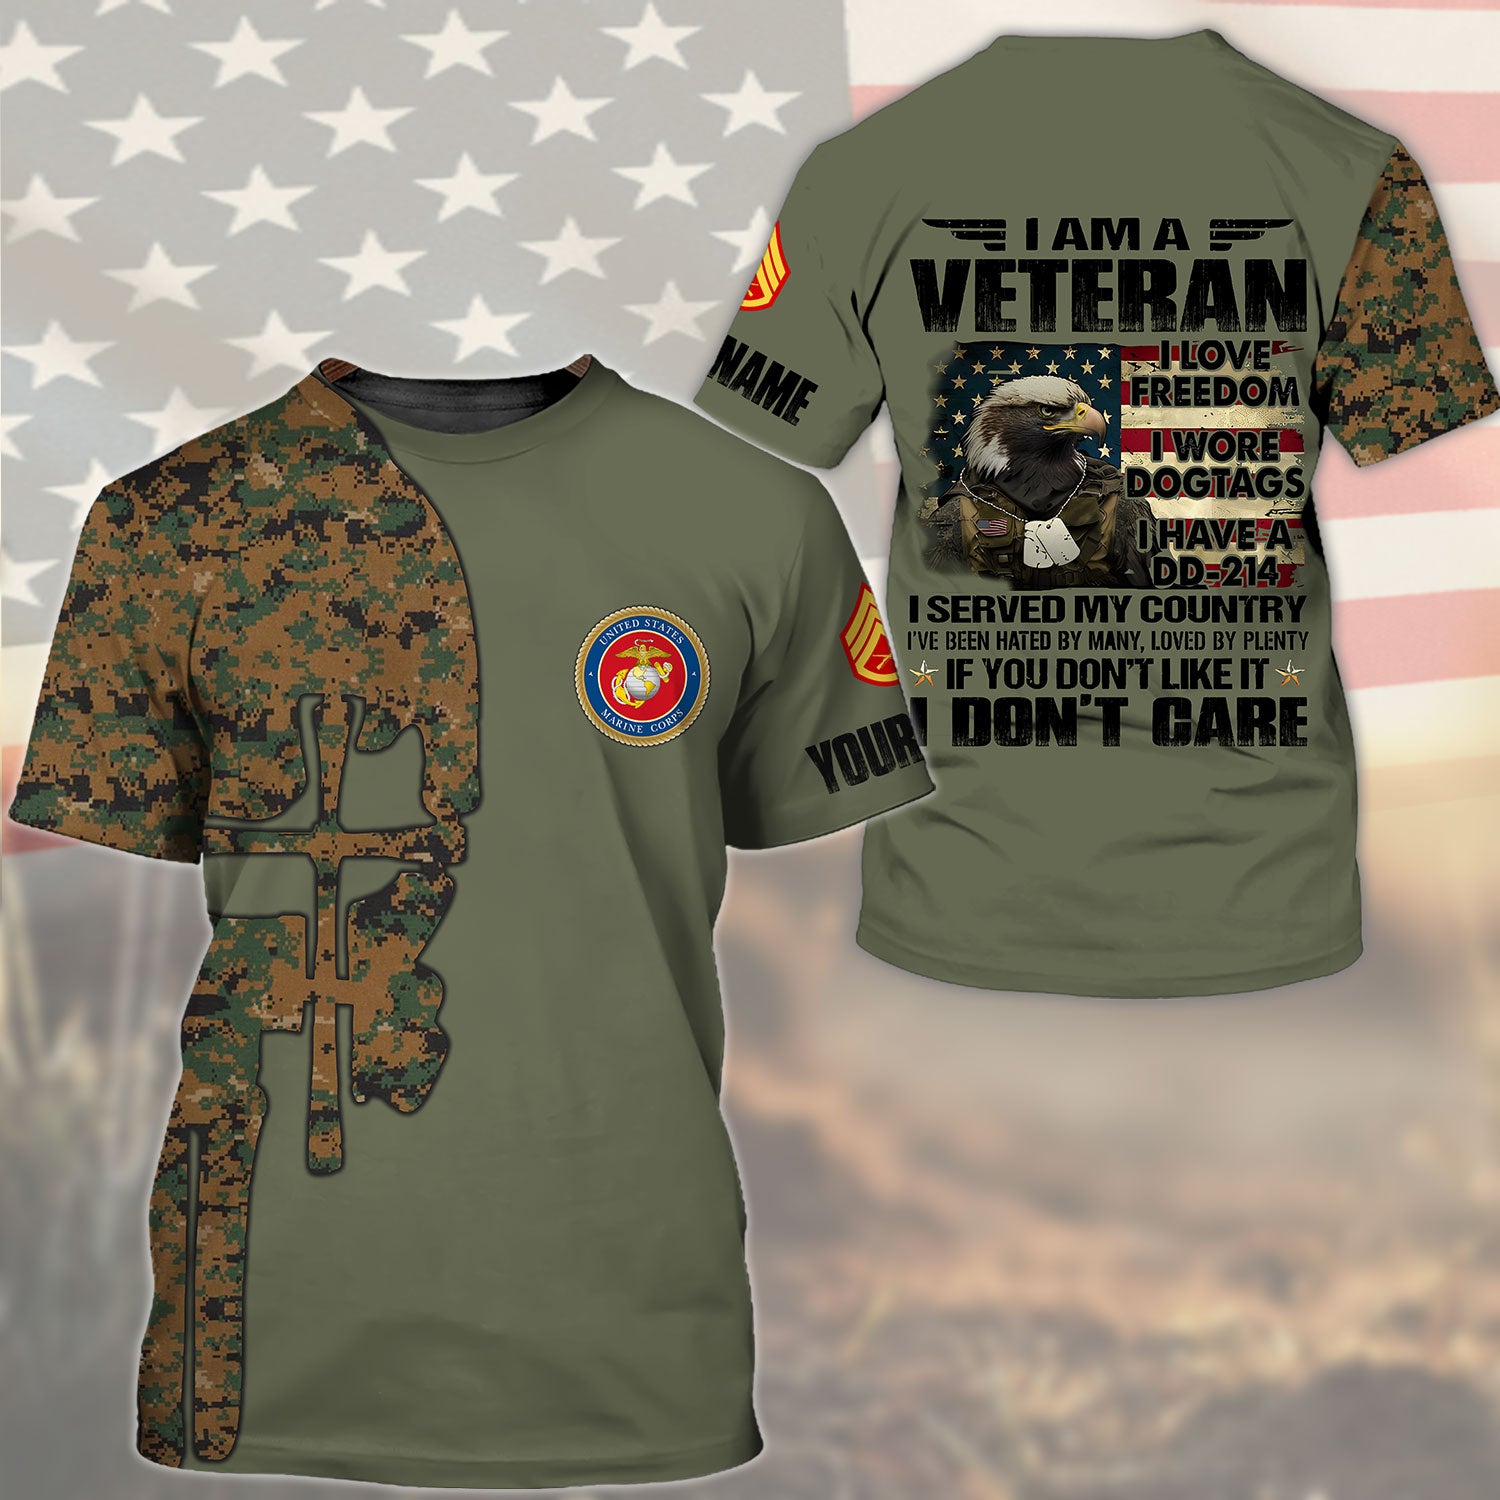 I Am Veteran - I love Freedom - I Wore Dogtags - I Have A DD-214 - Customized U.S. Veteran Marine Corps T-Shirt, Gift For Veterans